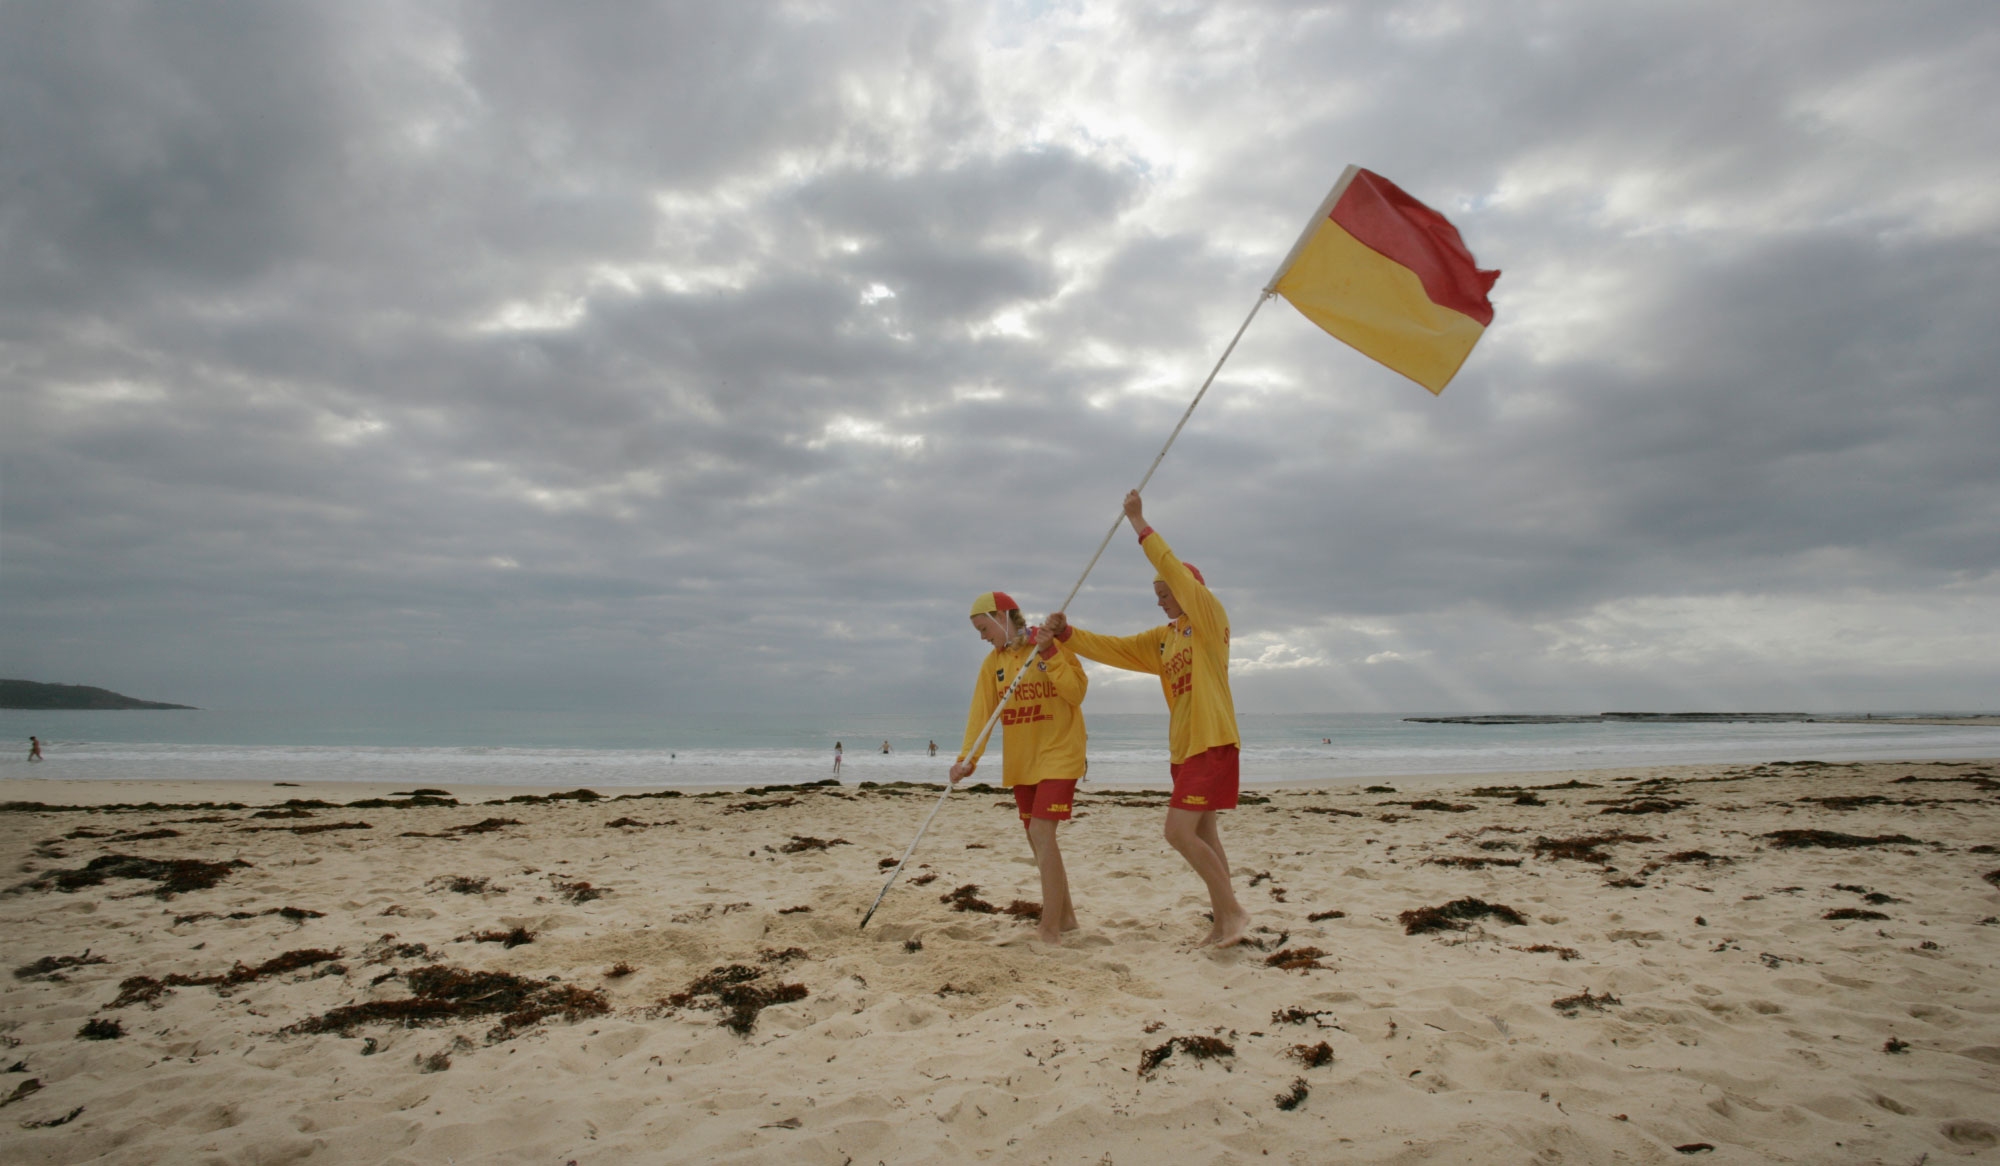 Surf lifesavers, Mollymook, New South Wales, 2006.